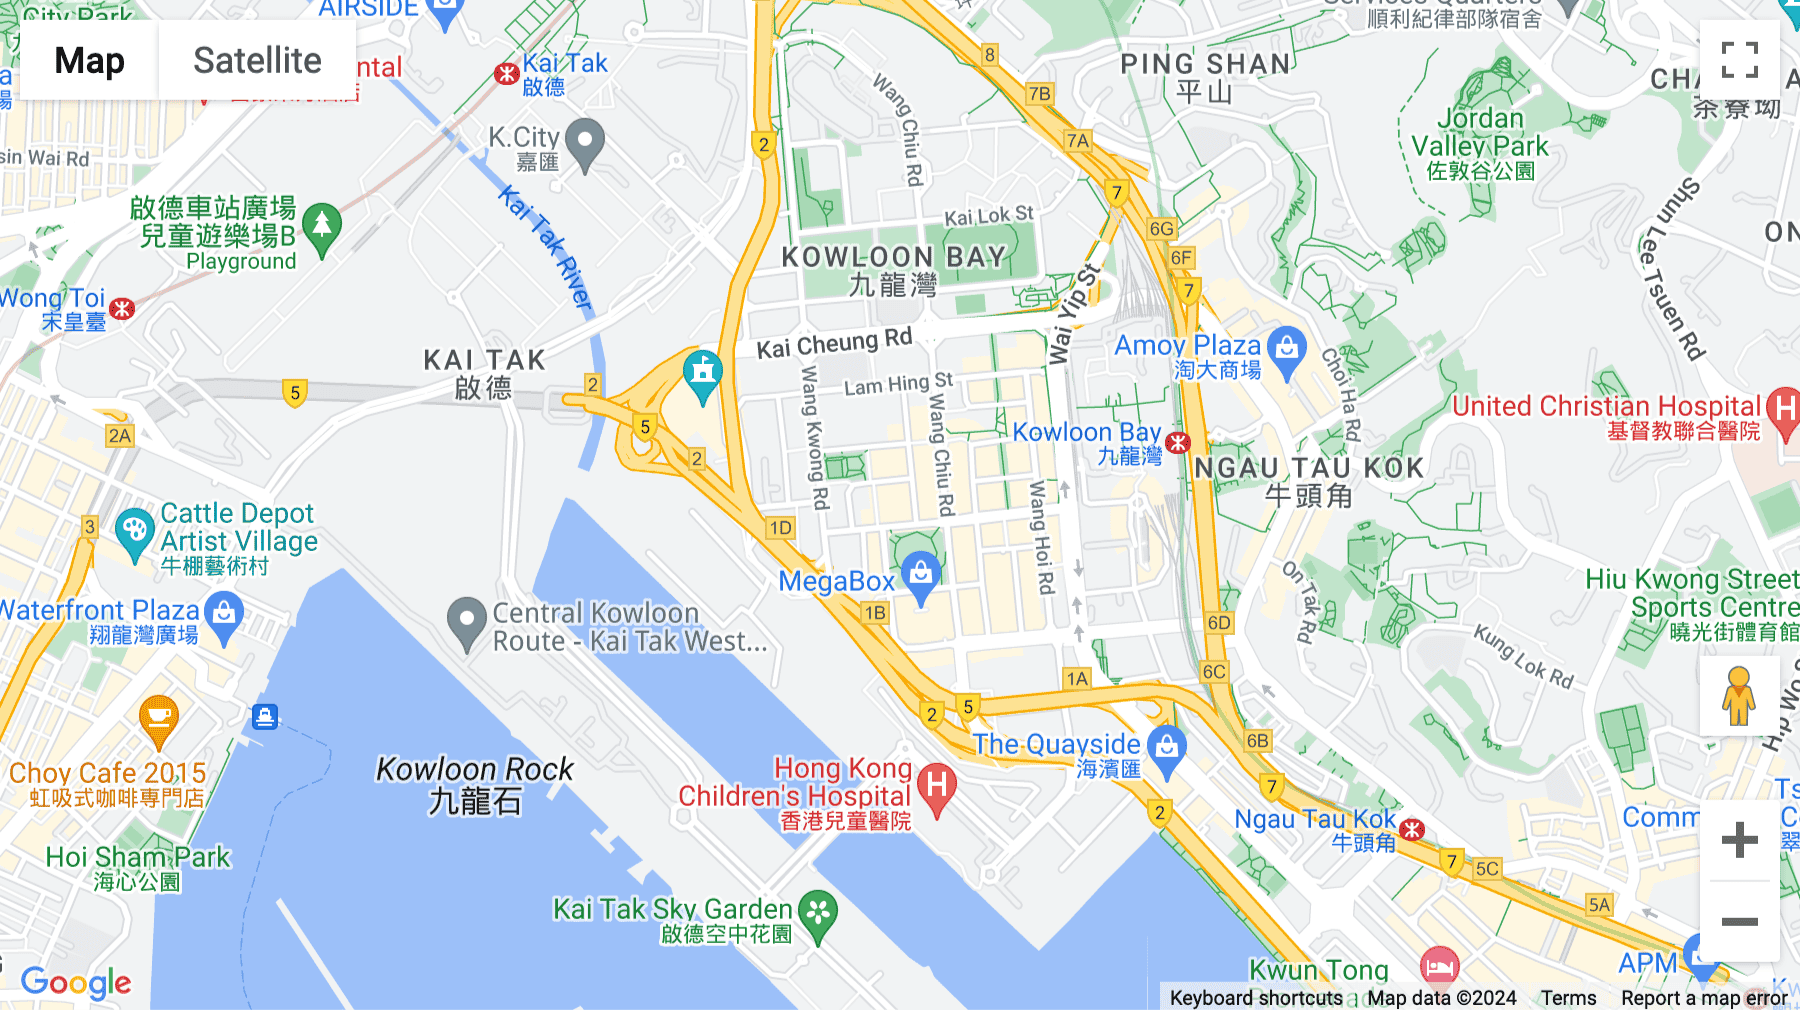 Click for interative map of Tower 1, Enterprise Square, 5th Floor, No.9 Sheung Yuet Road, Hong Kong